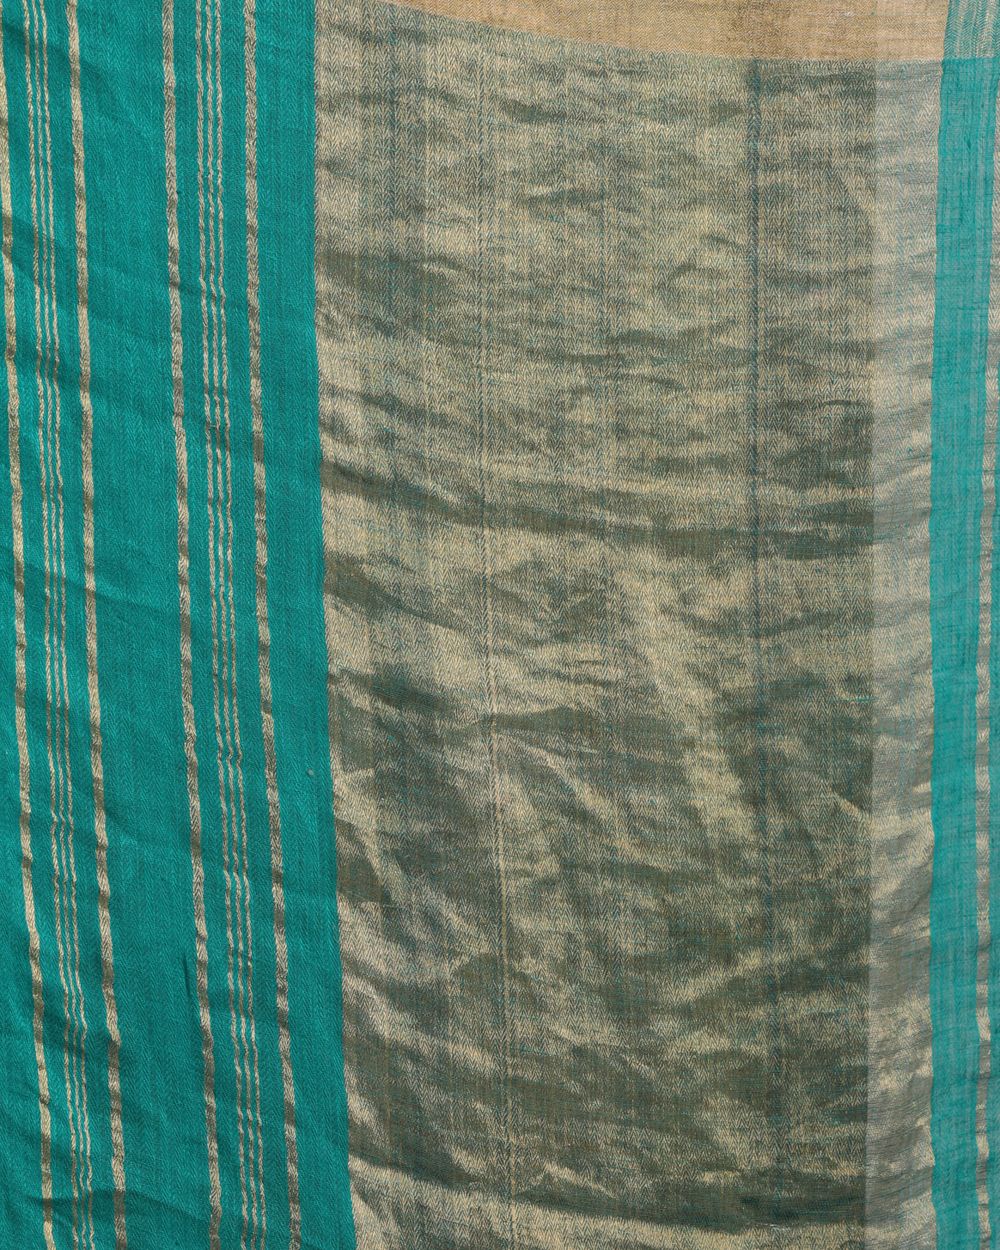 Turquoise handwoven linen saree